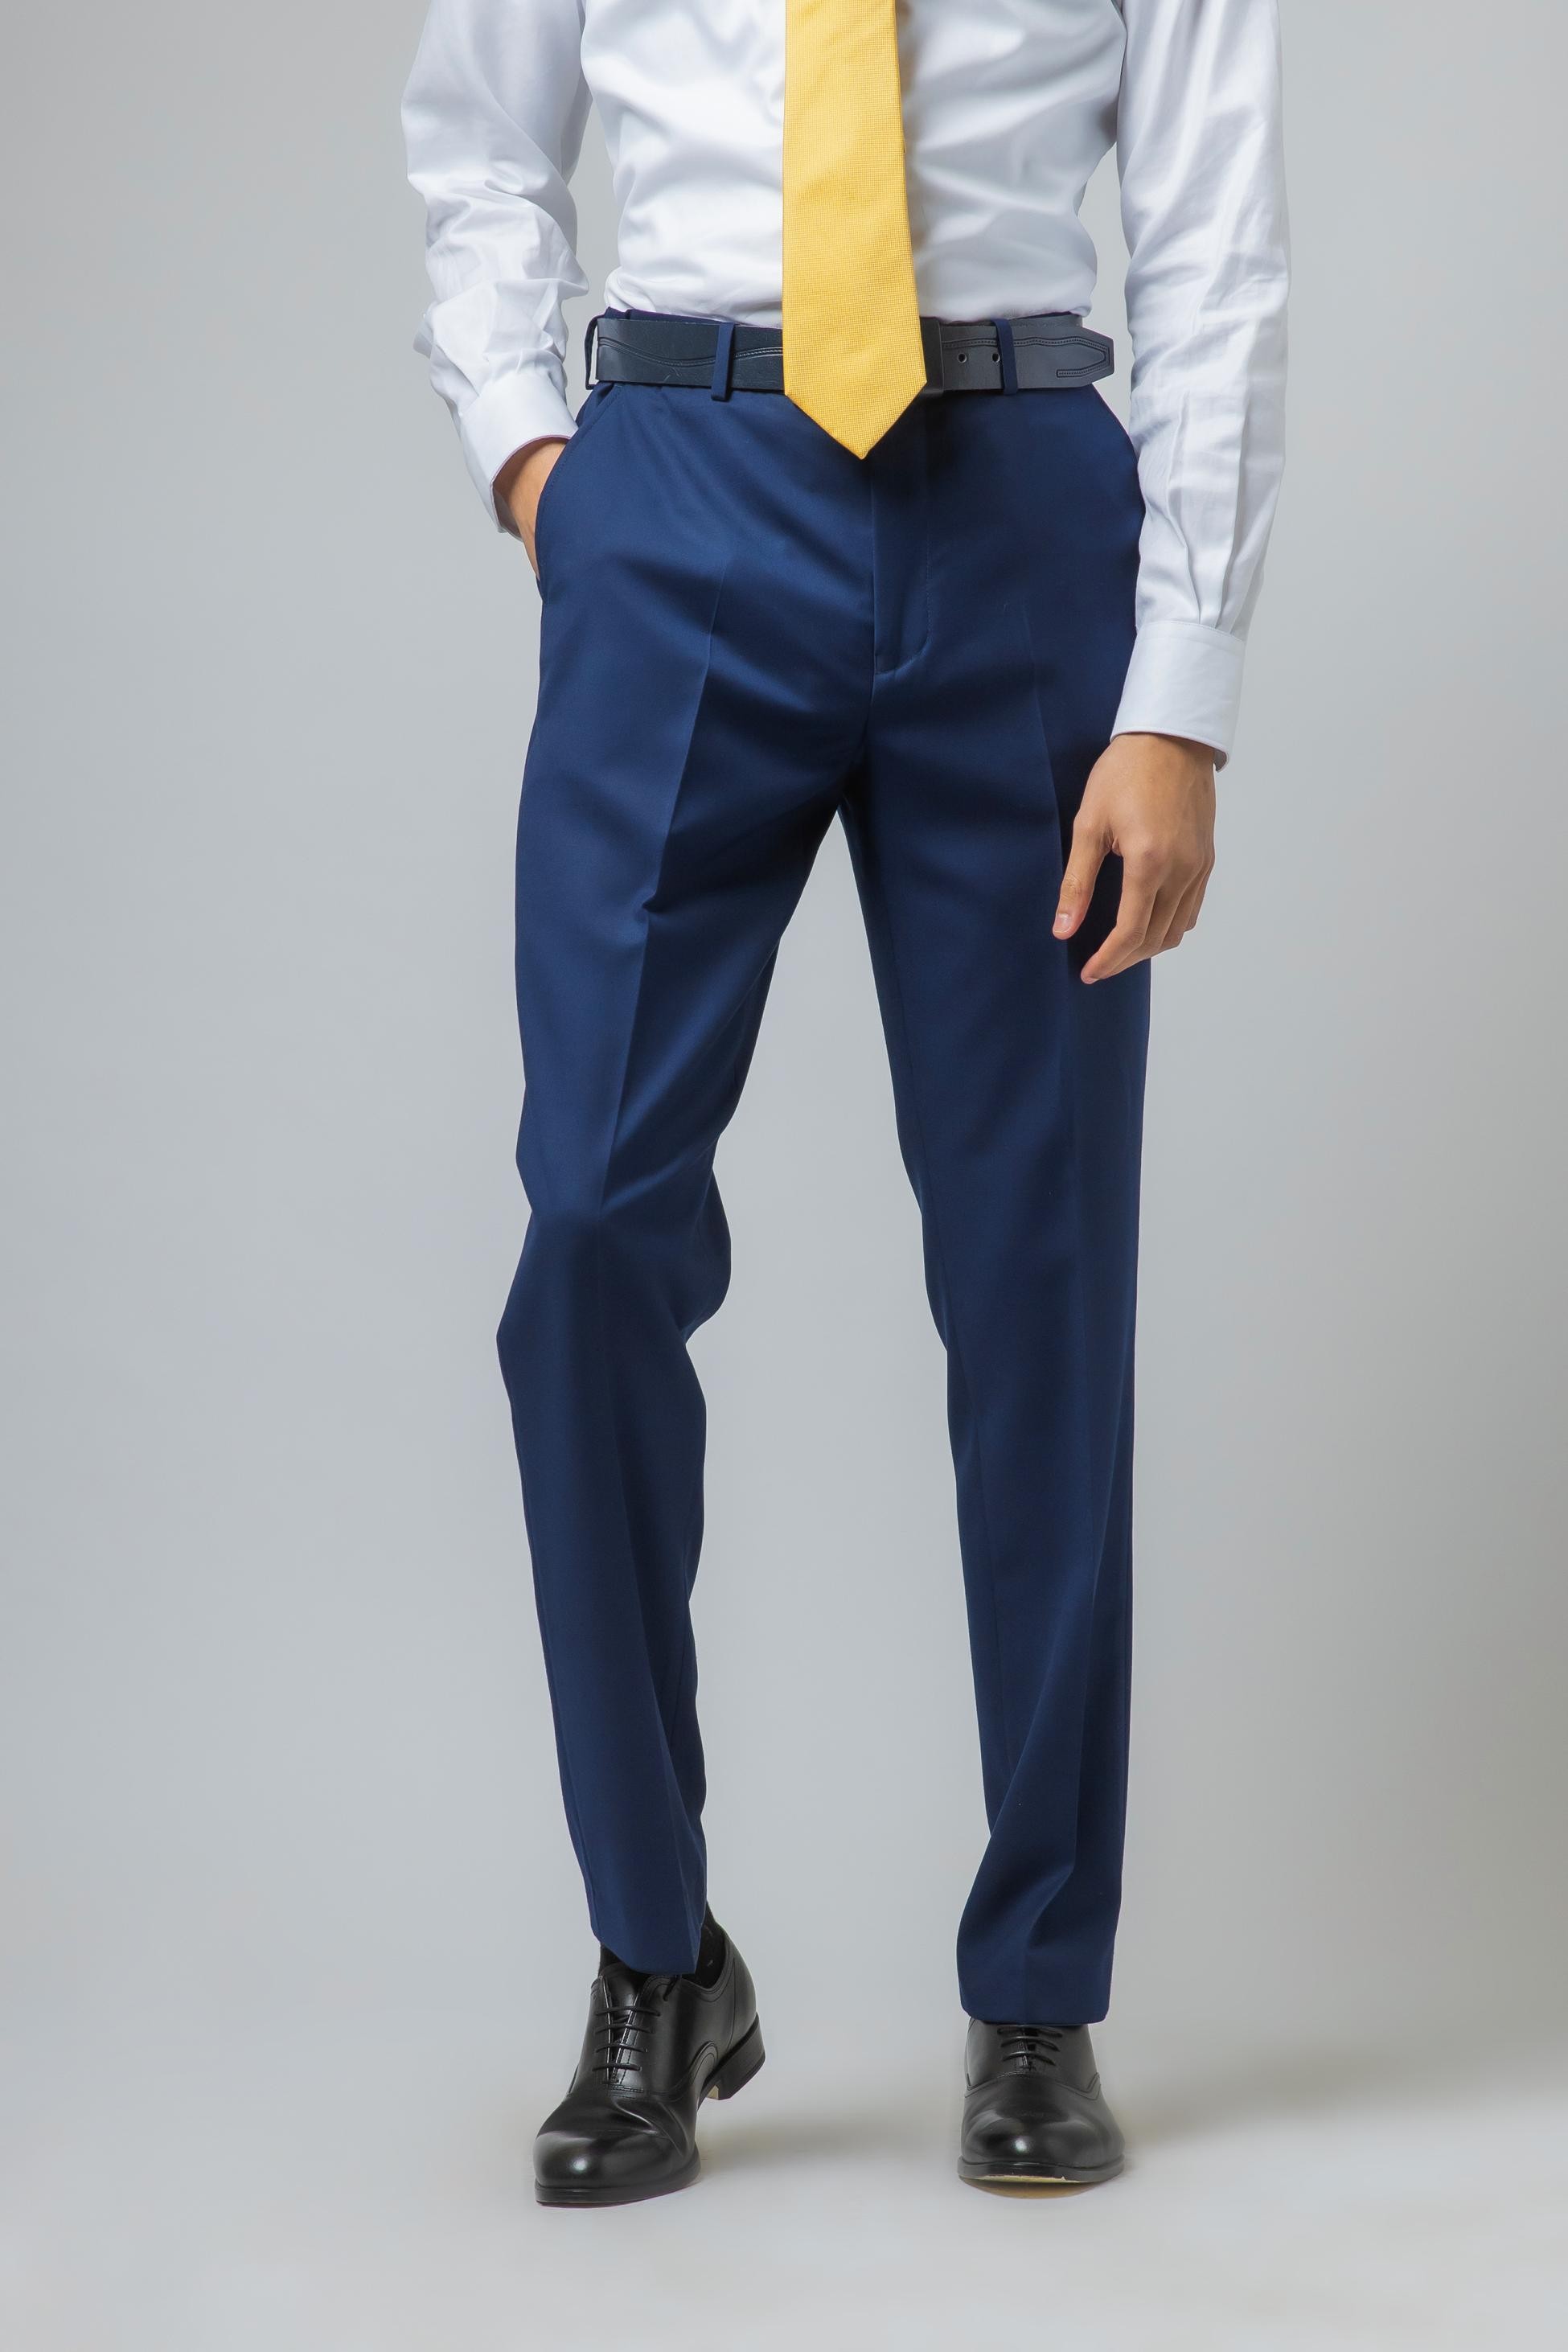 Men's Slim Fit Navy Pants - ISAAC